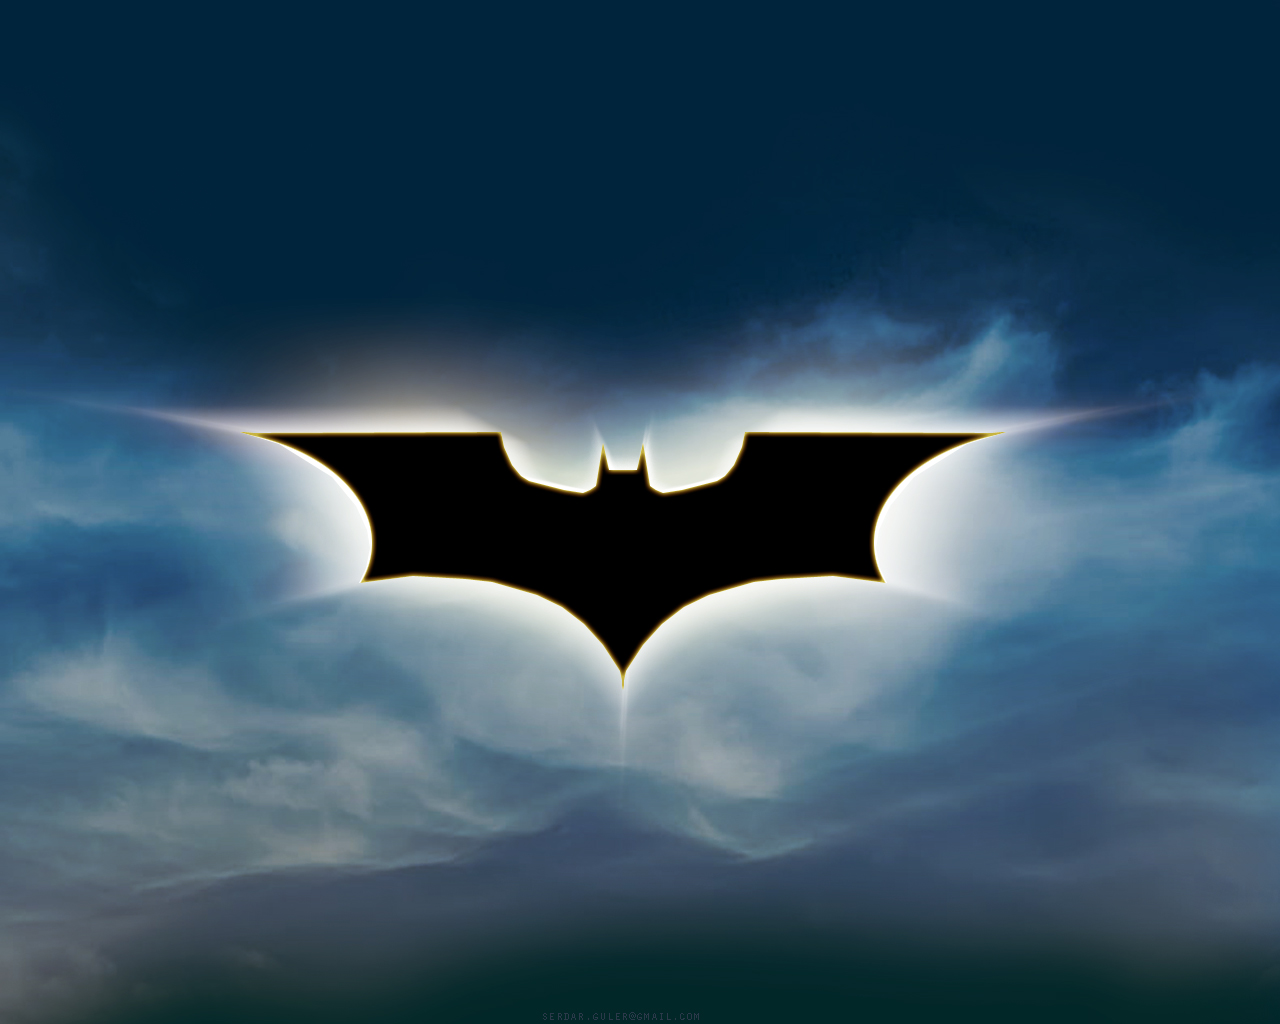 Batman - The Dark Knight by serdarguler on DeviantArt